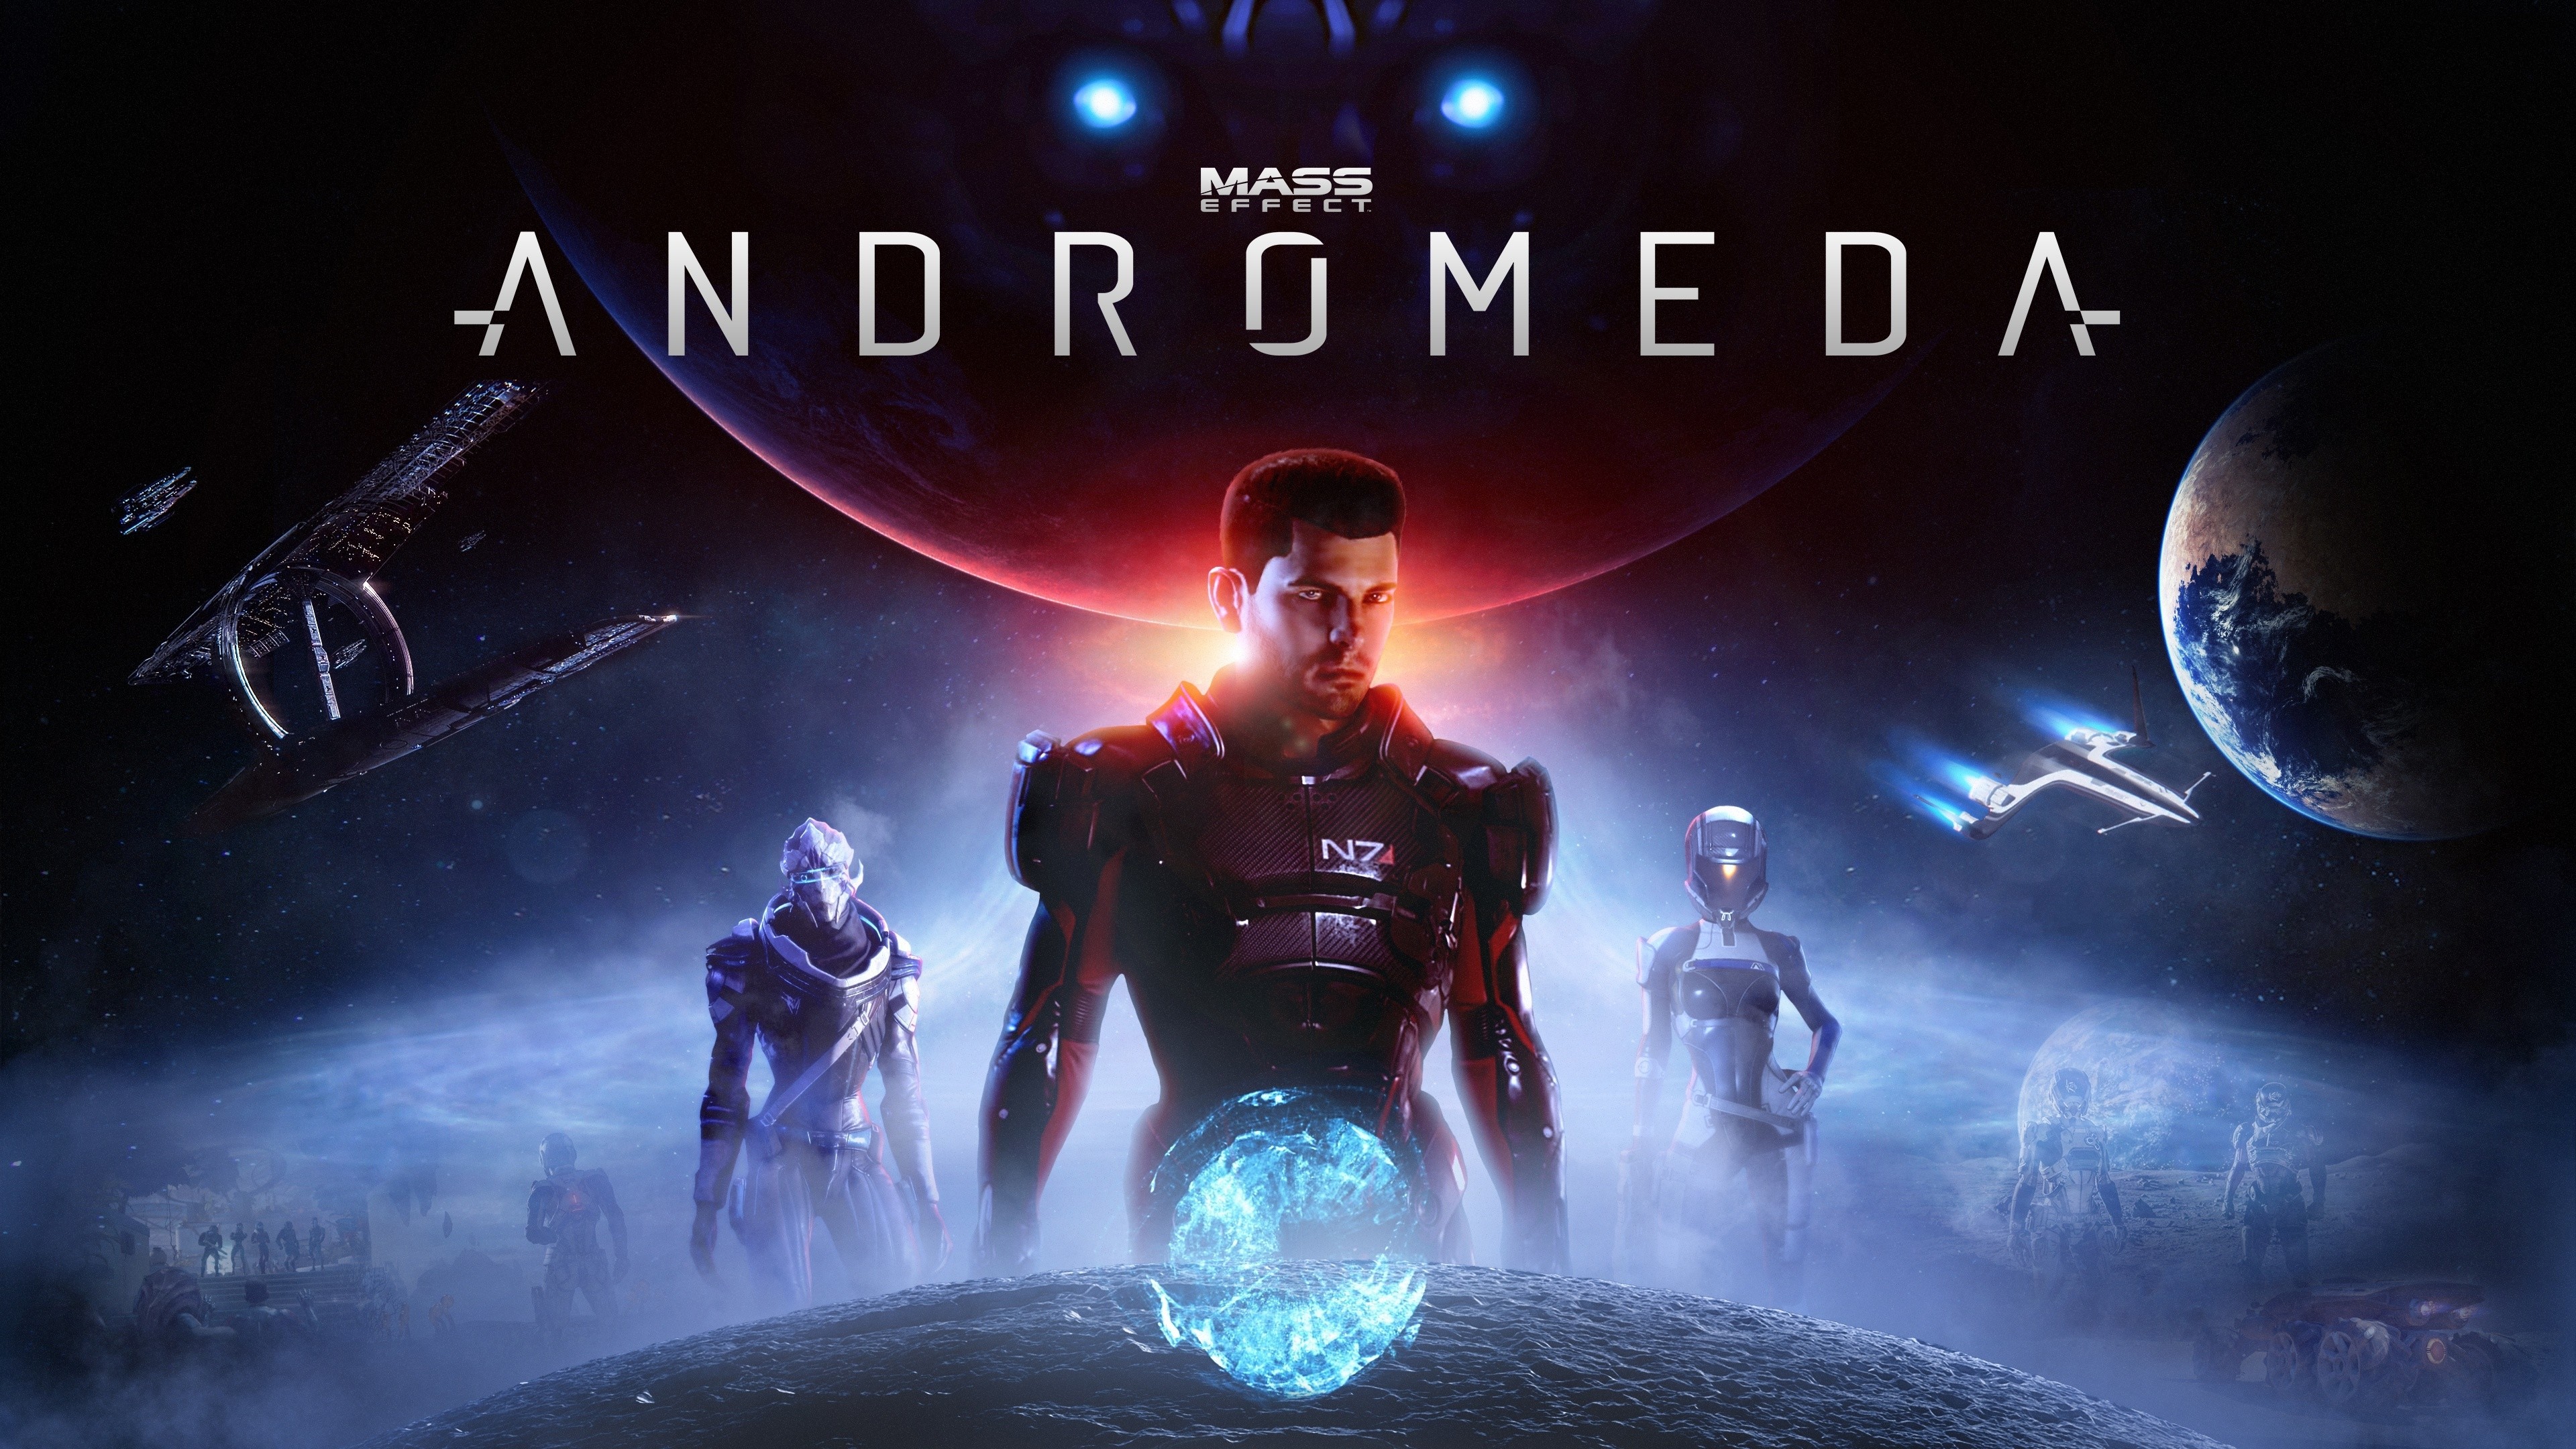 3840x2160 Mass Effect Andromeda 4K 2017 Wallpapers | Hd Wallpapers with Mass Effect  Andromeda Wallpaper 2017